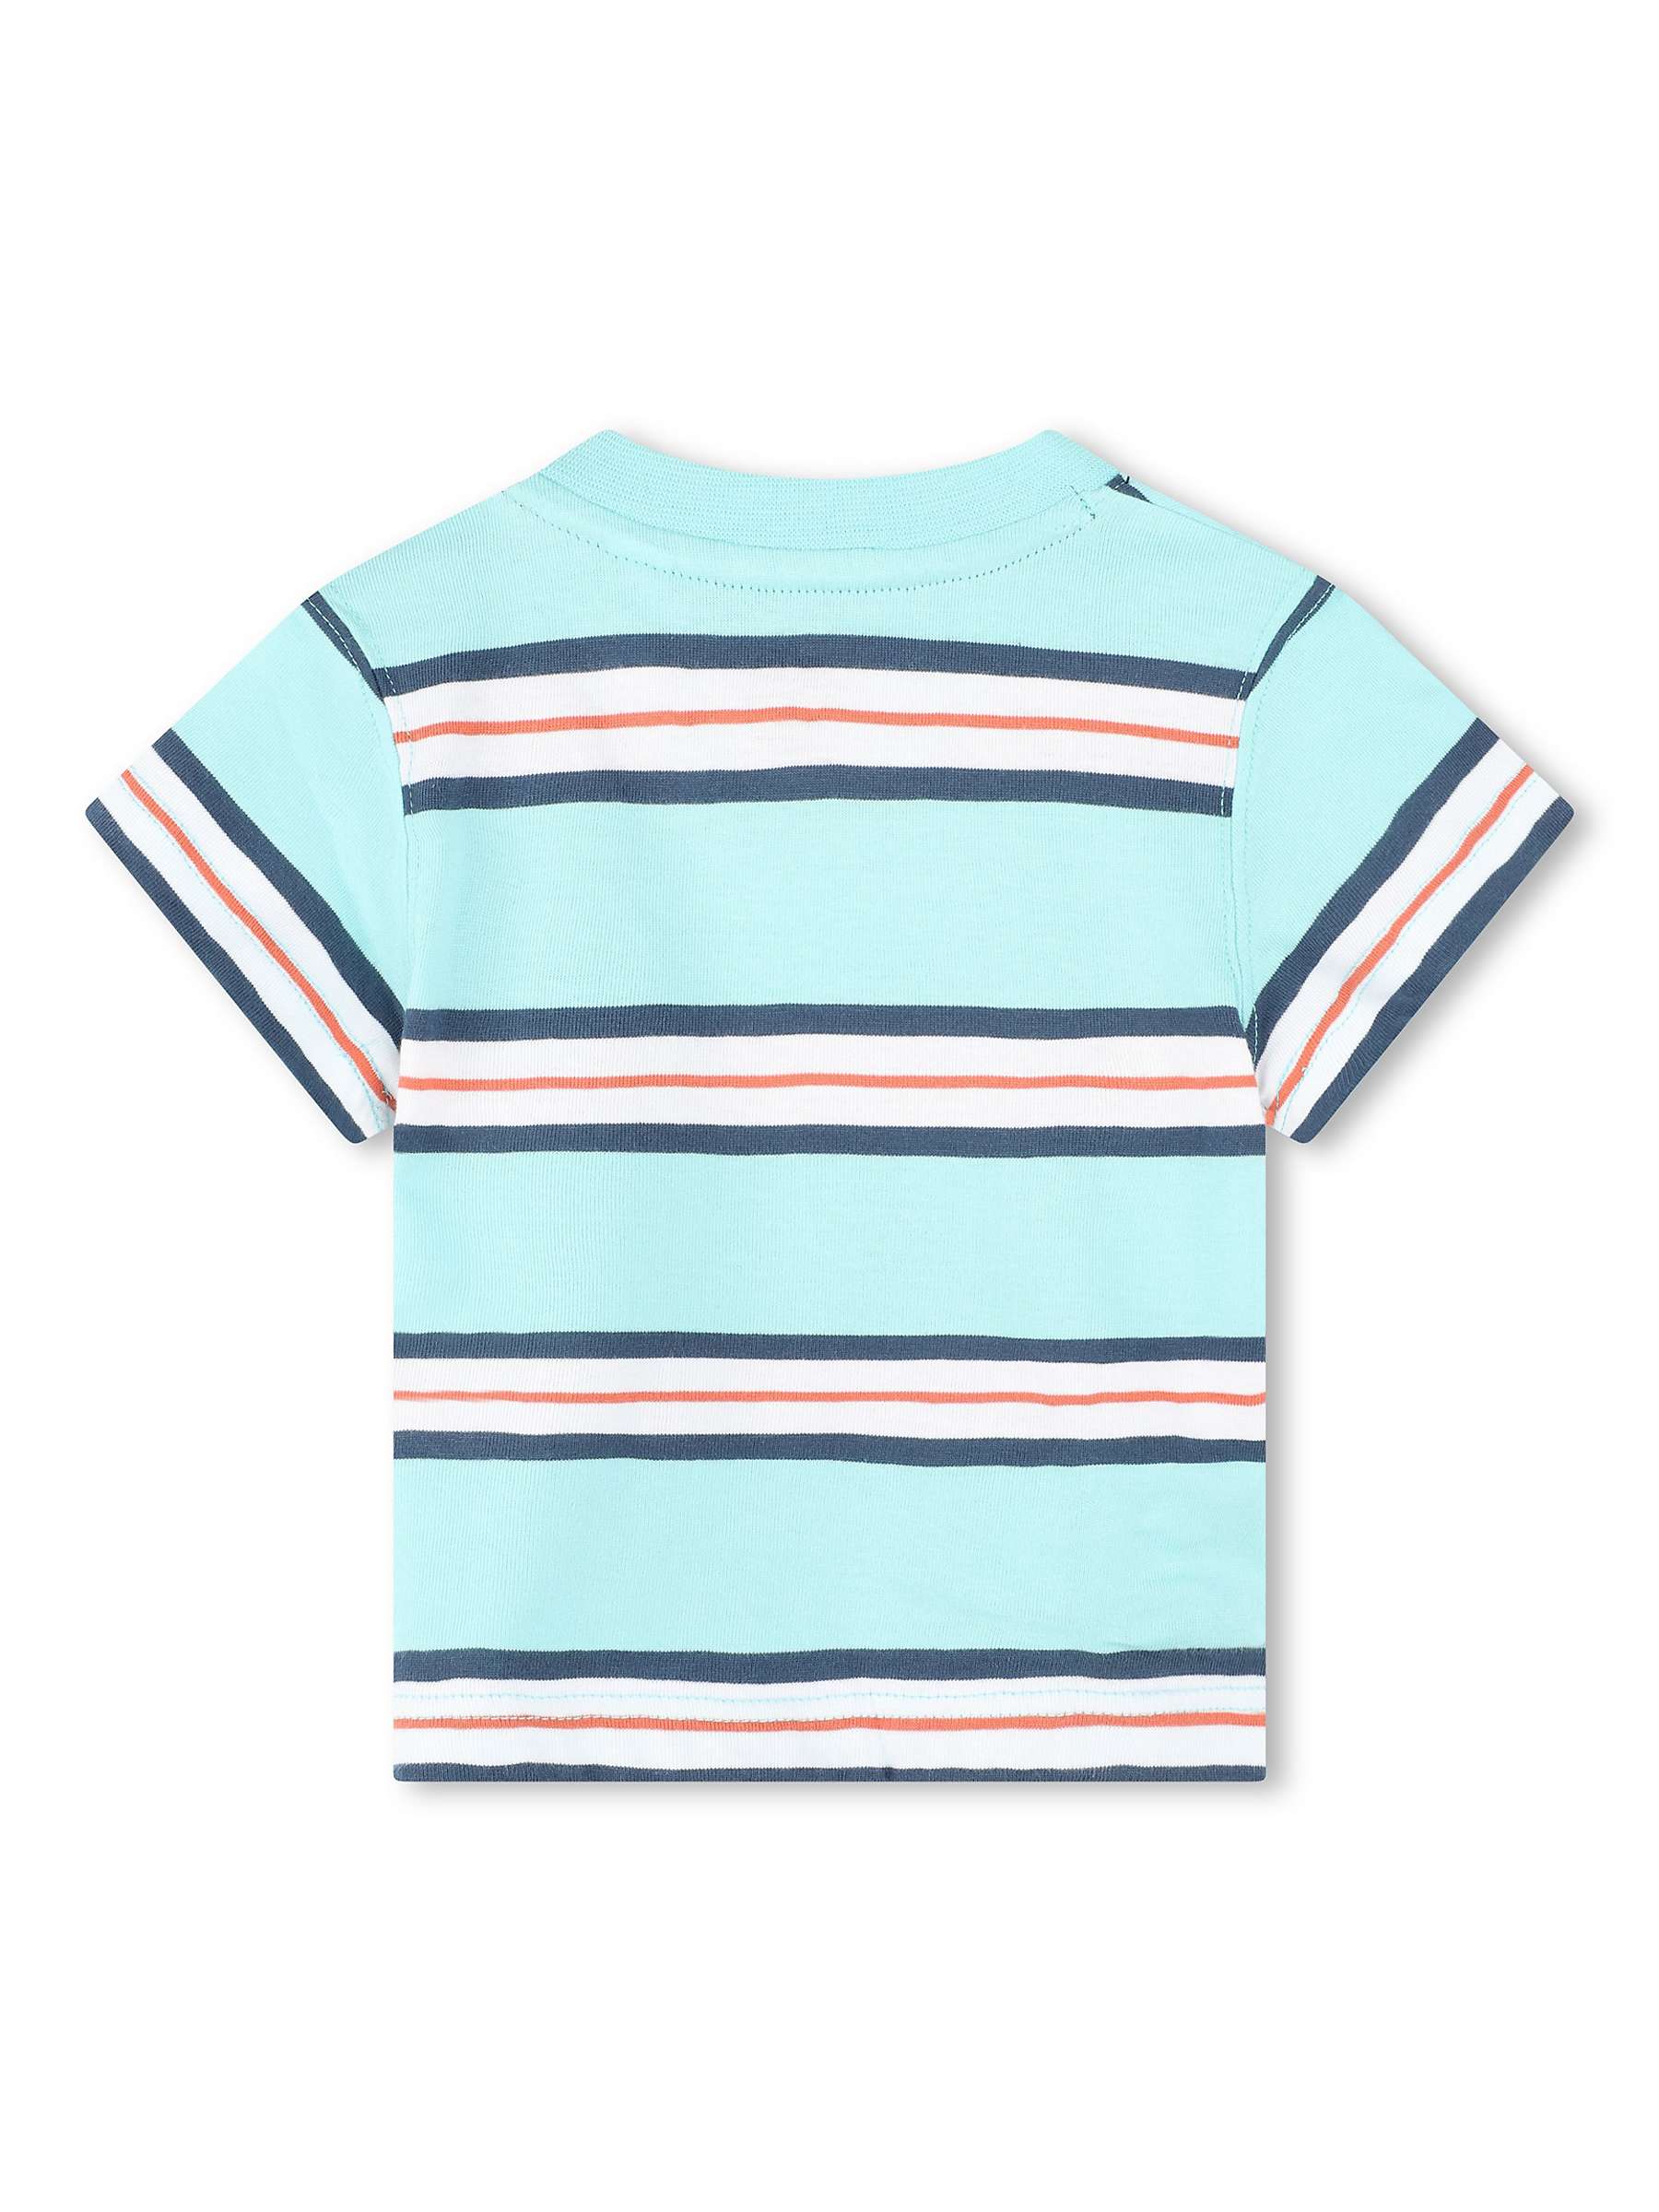 Buy Timberland Baby Fancy Logo Stripe T-Shirt, Blue/Multi Online at johnlewis.com